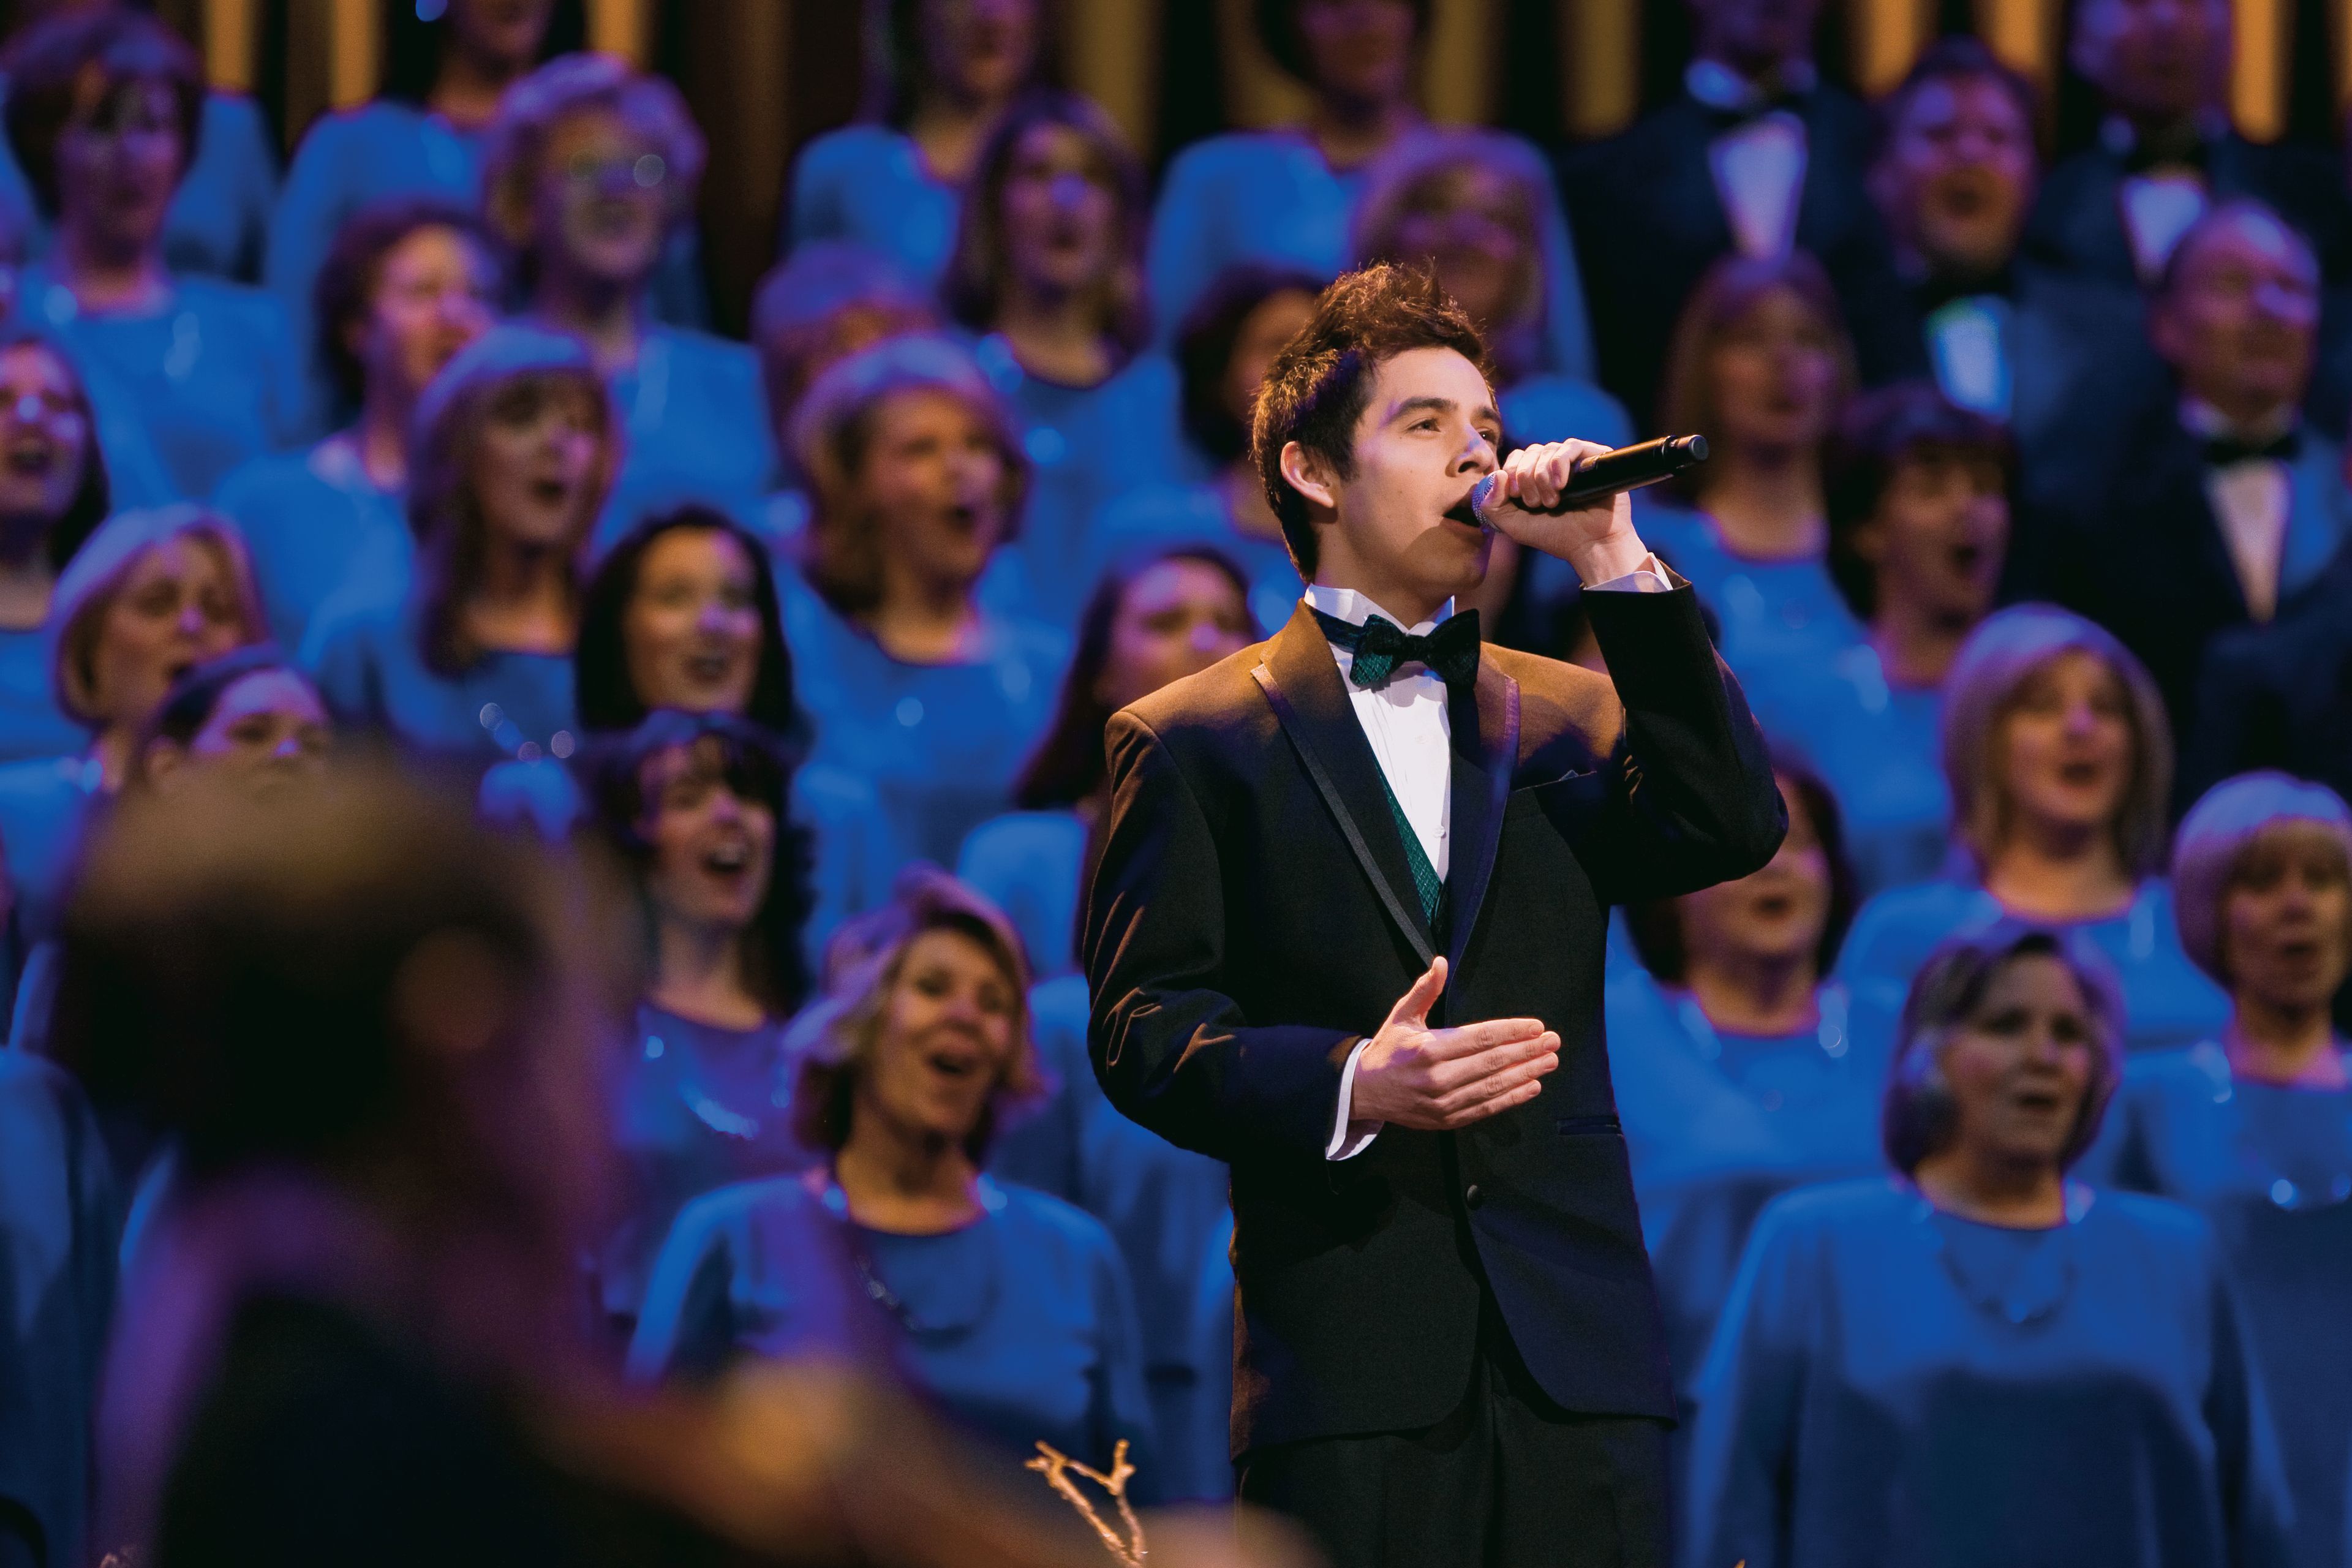 David Archuleta performs at the Mormon Tabernacle Choir Christmas concert.